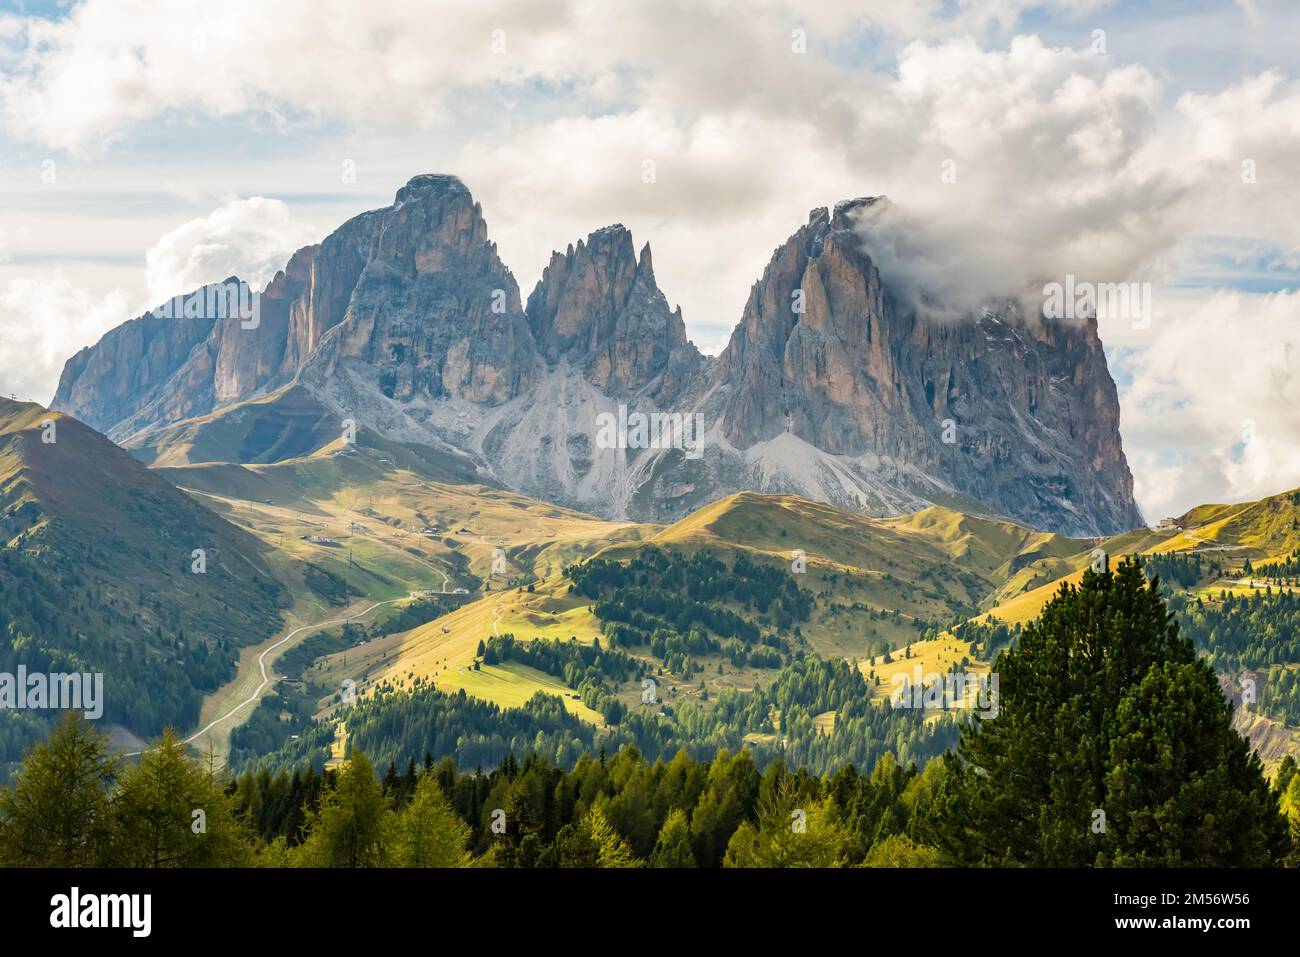 Mountain landscape of Sassolungo or Langkofel group, Dolomites mountains, Italy Stock Photo